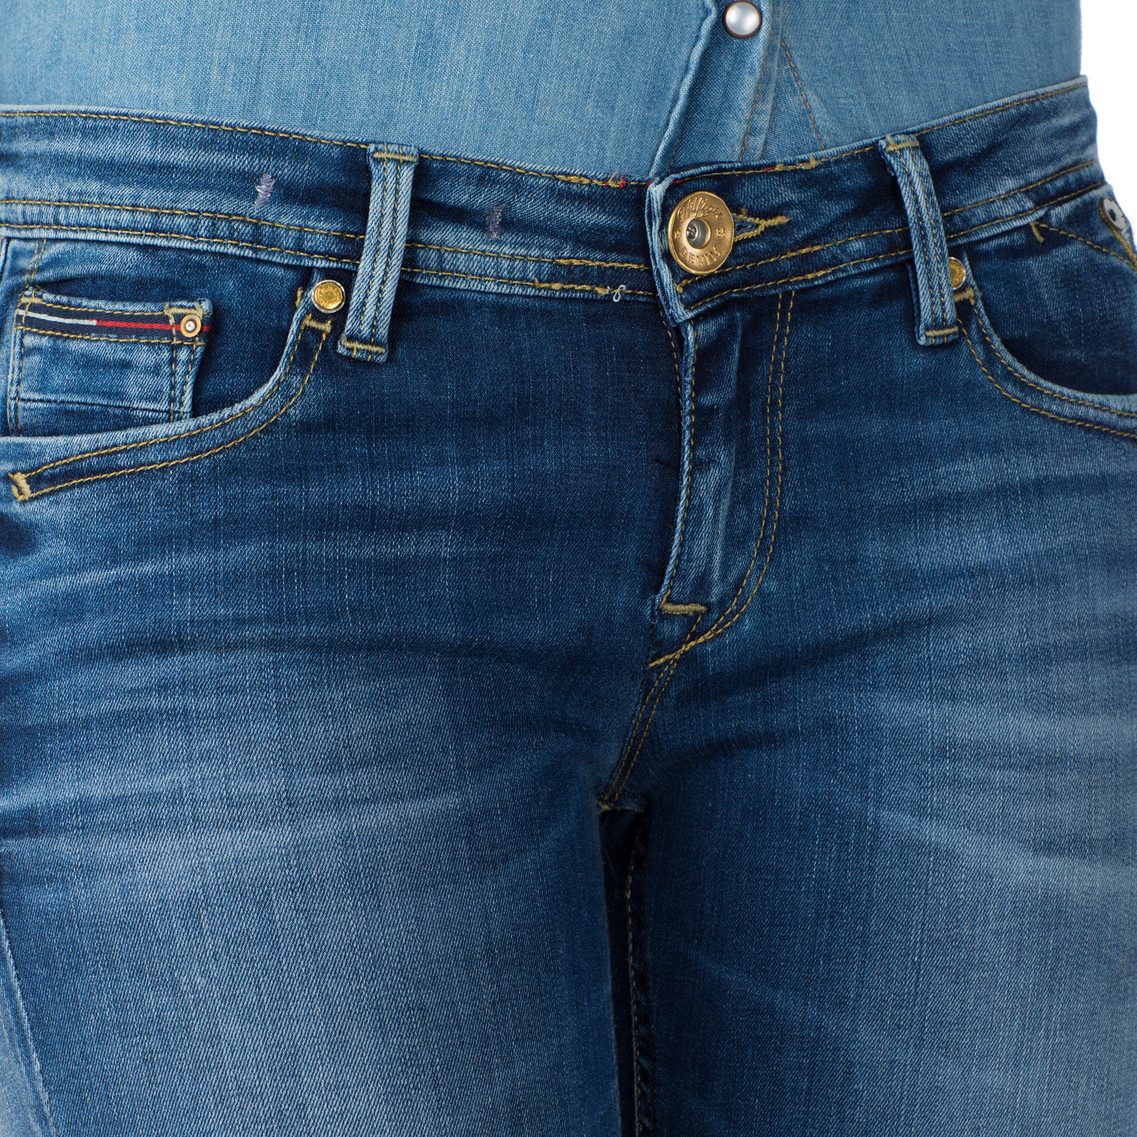 Tommy Hilfiger Natalie Skinny Jeans in Blue - Lyst